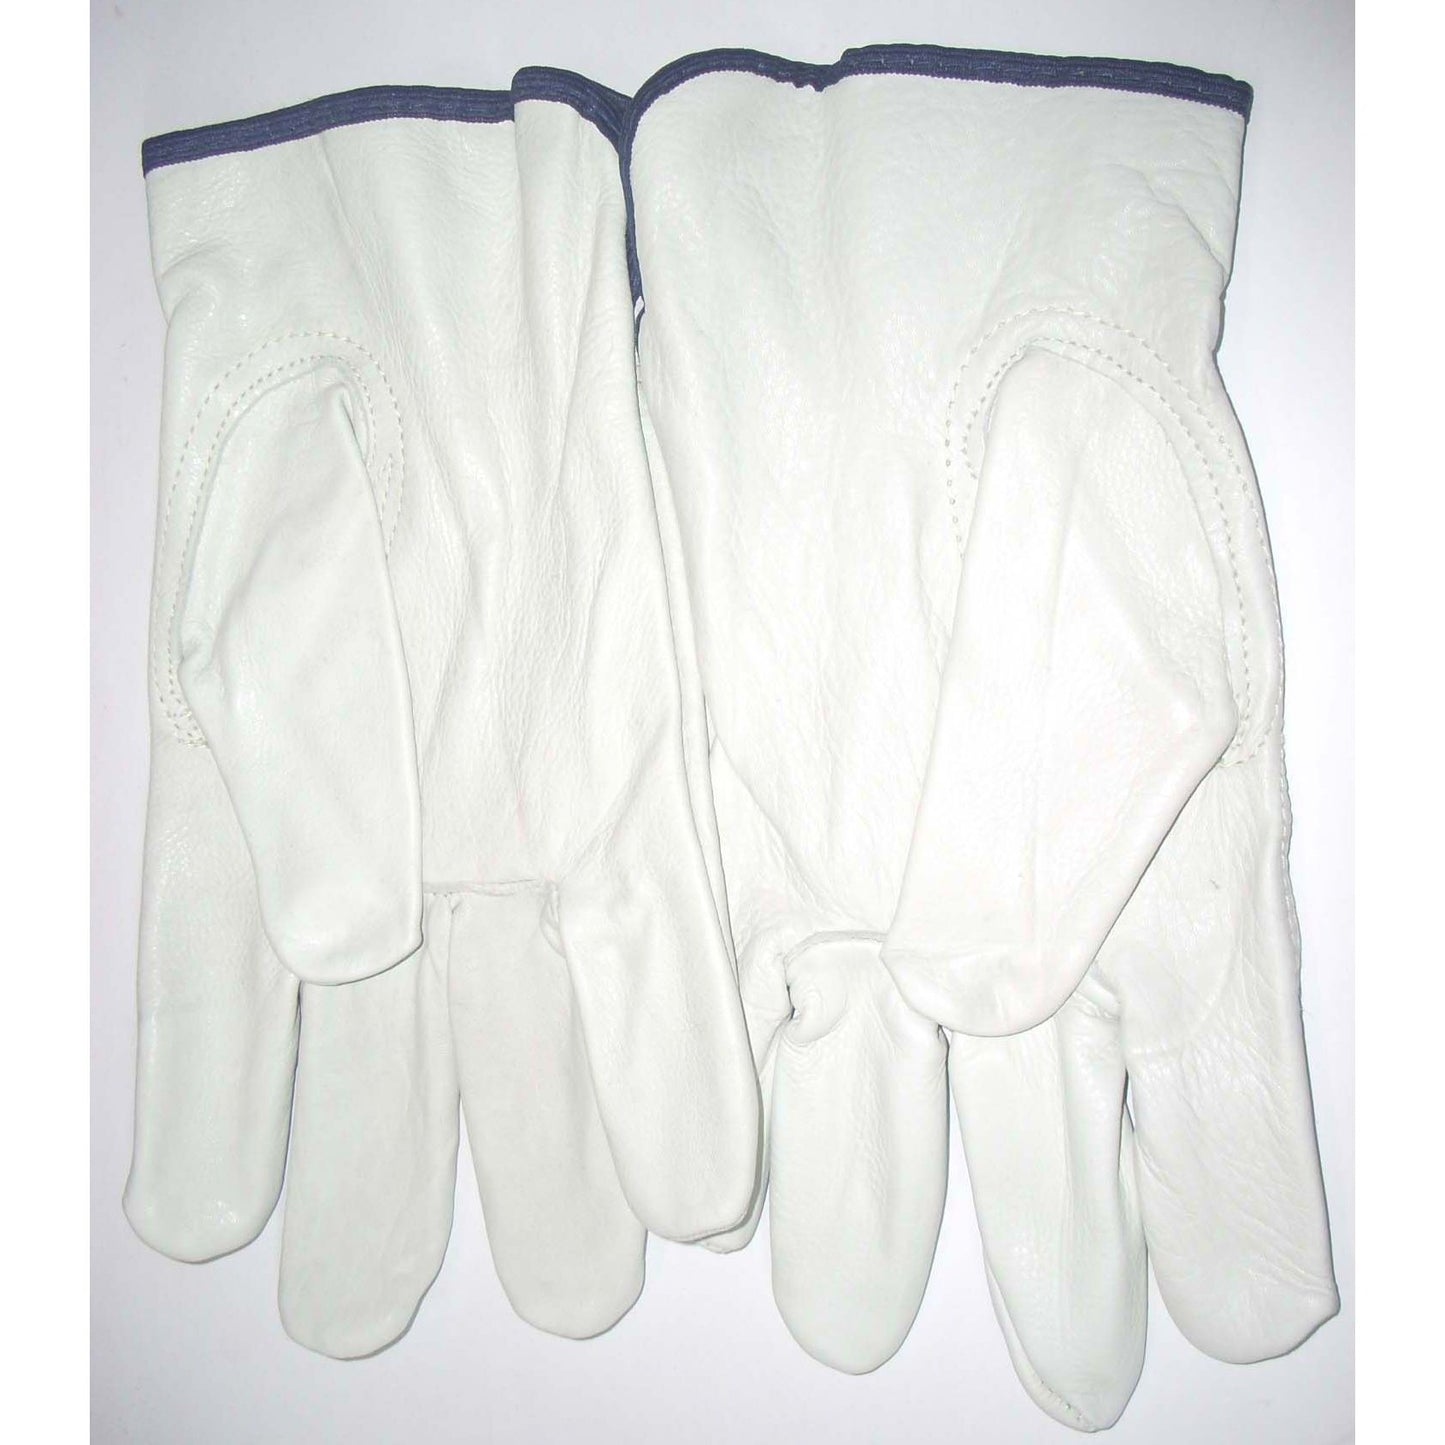 Southern Glove GLDK2XL Goatskin Leather Driver Gloves Size 2XL